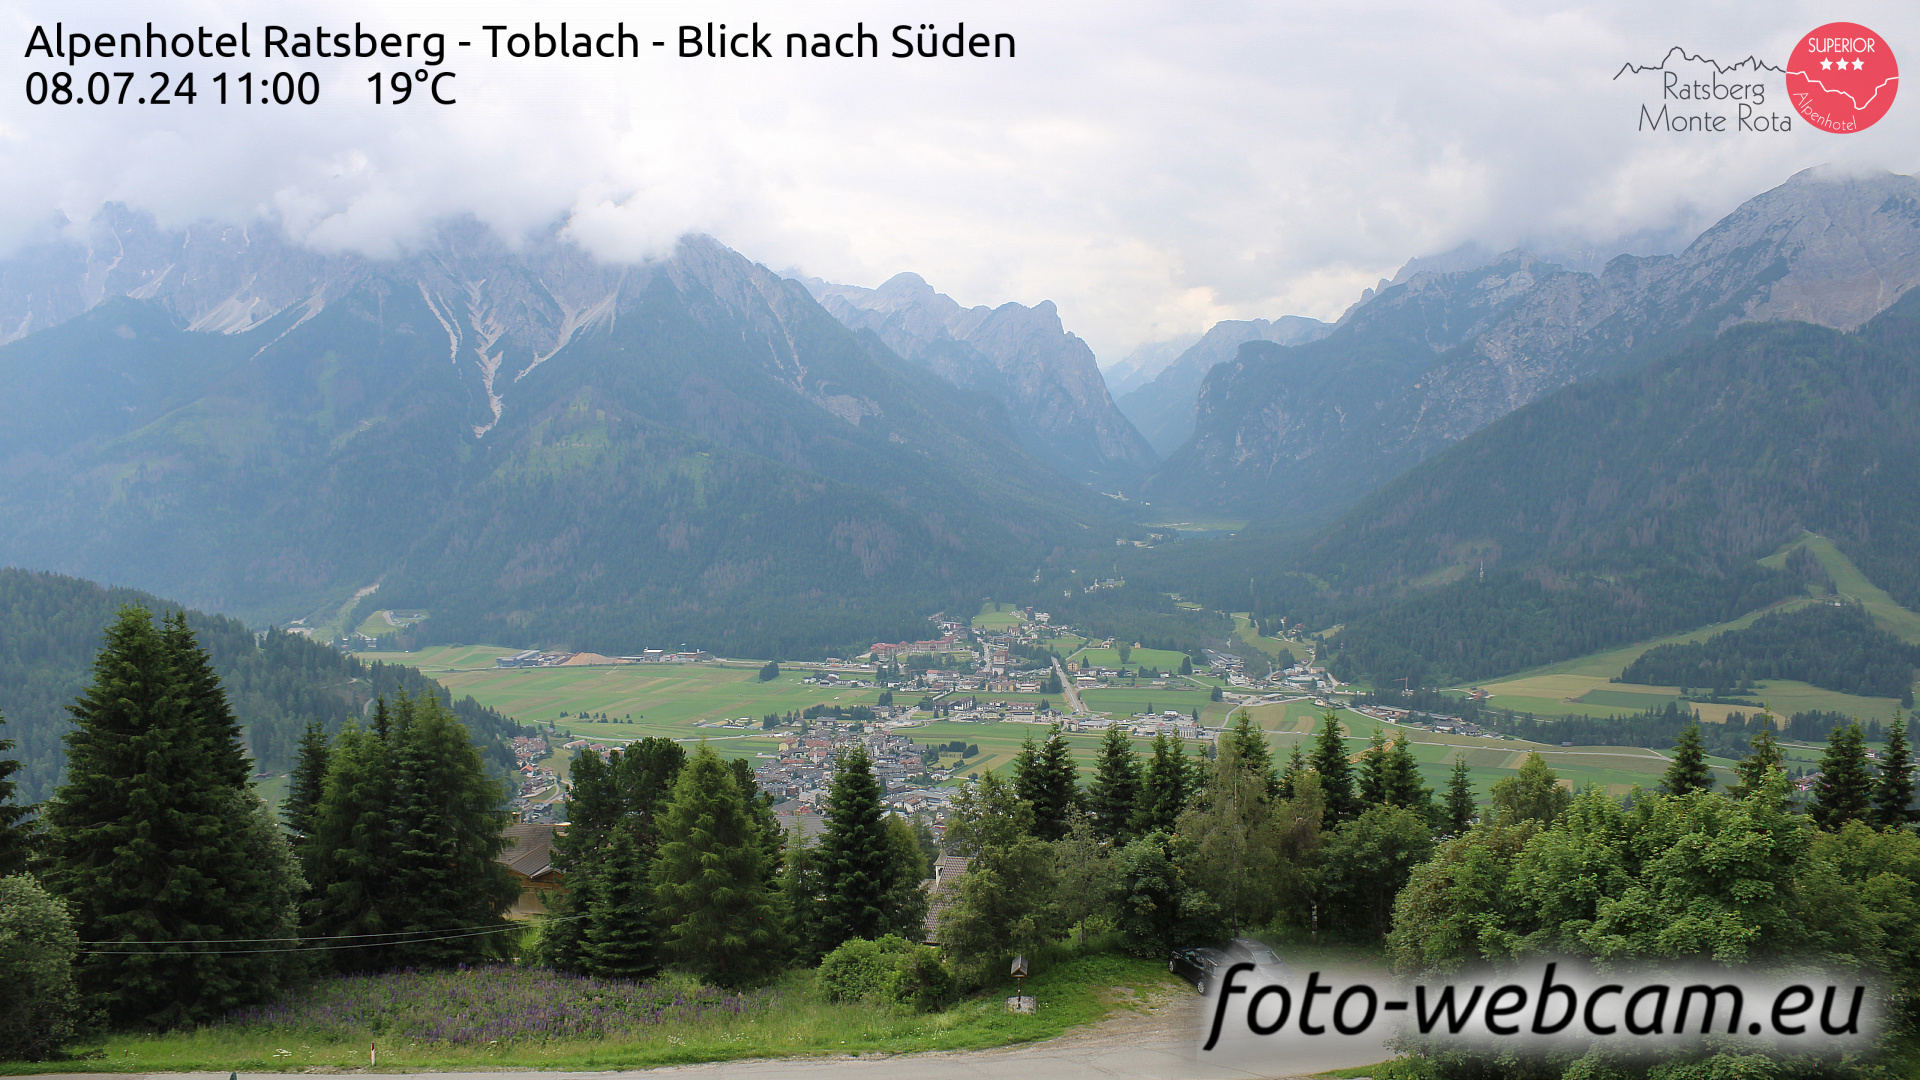 Toblach (Dolomites) Thu. 11:03